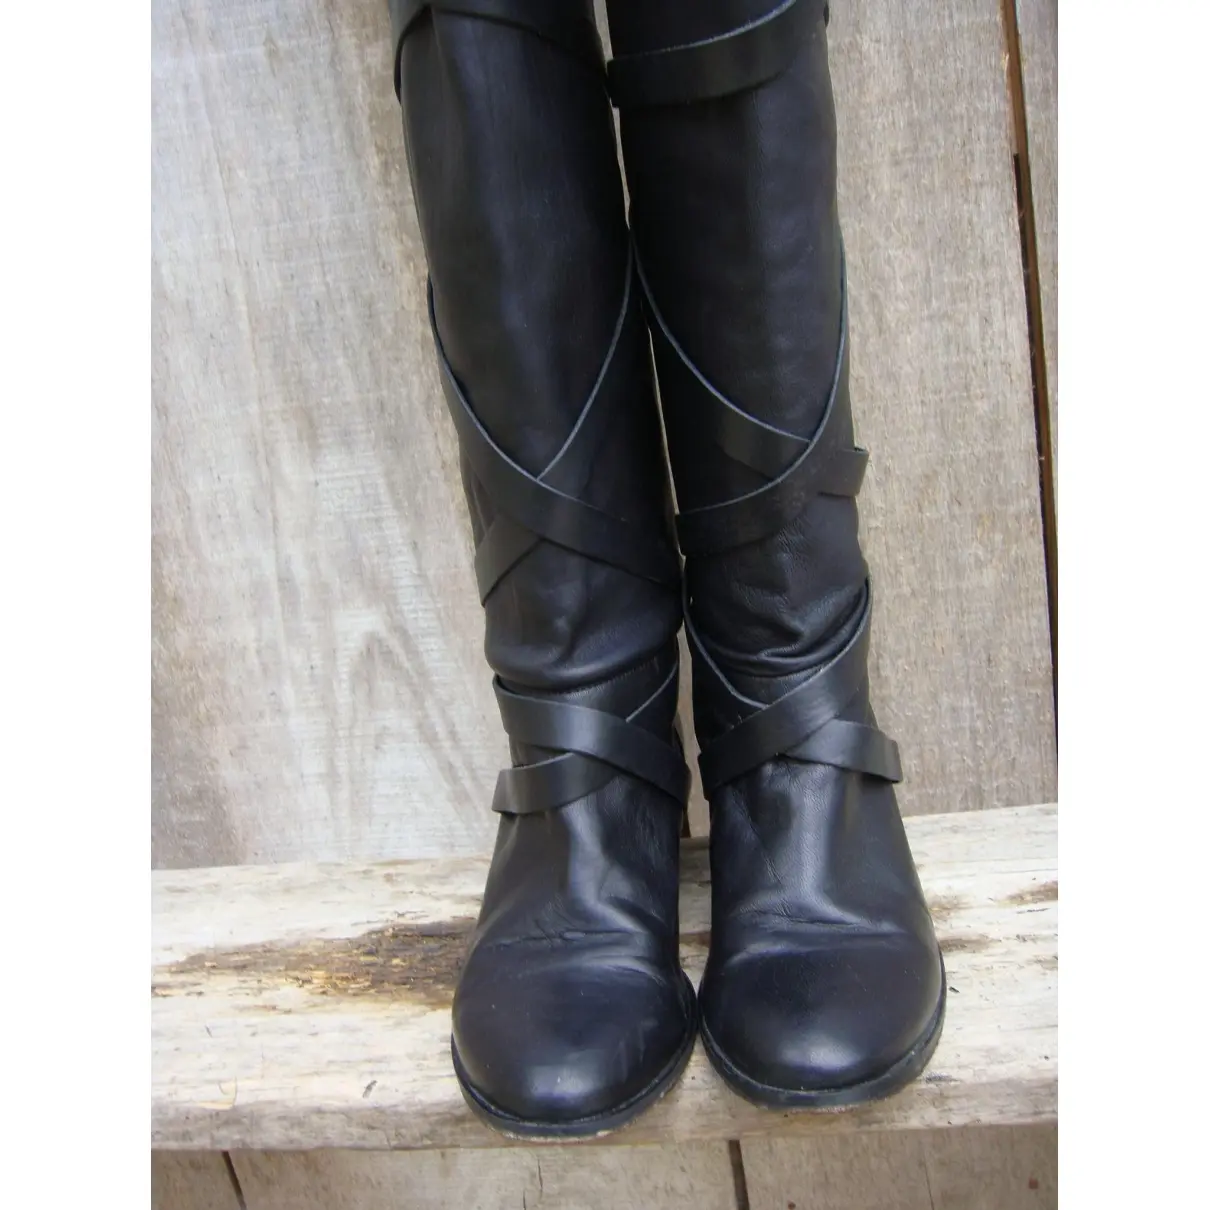 Buy Les Petites Leather boots online